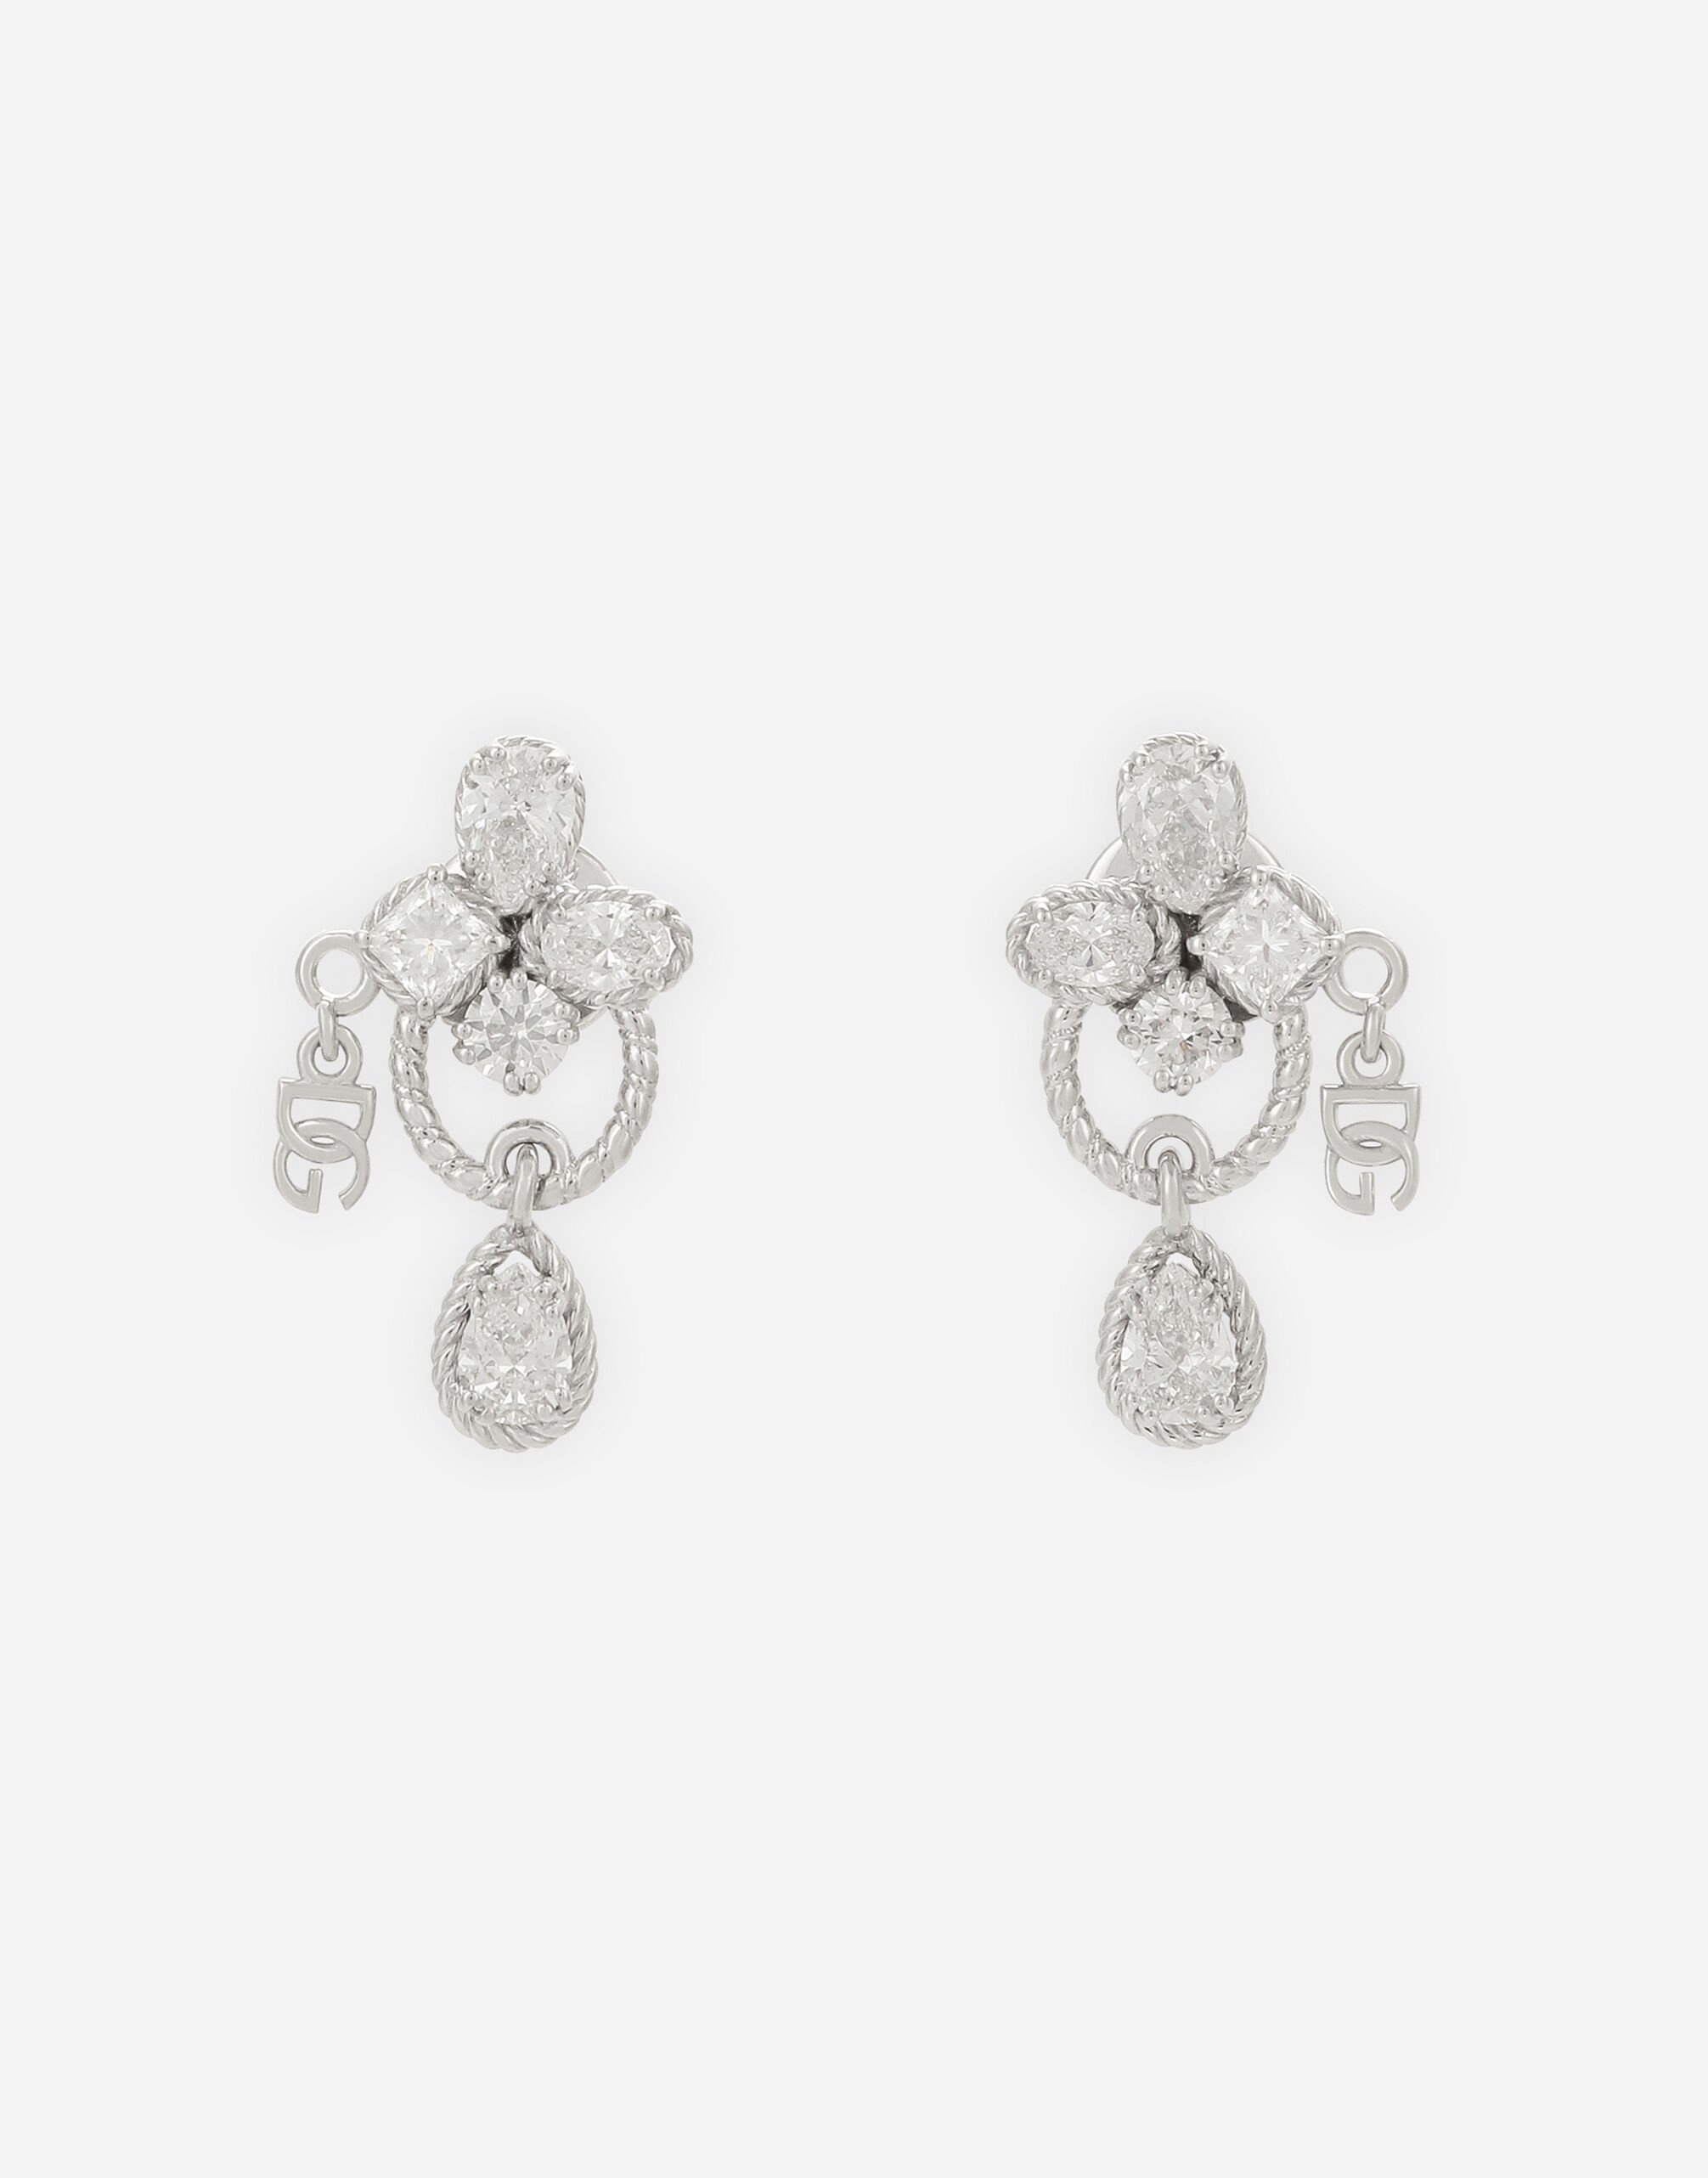 Dolce & Gabbana Easy Diamond earrings in white gold 18Kt and diamonds Gold WSQB1GWPE01